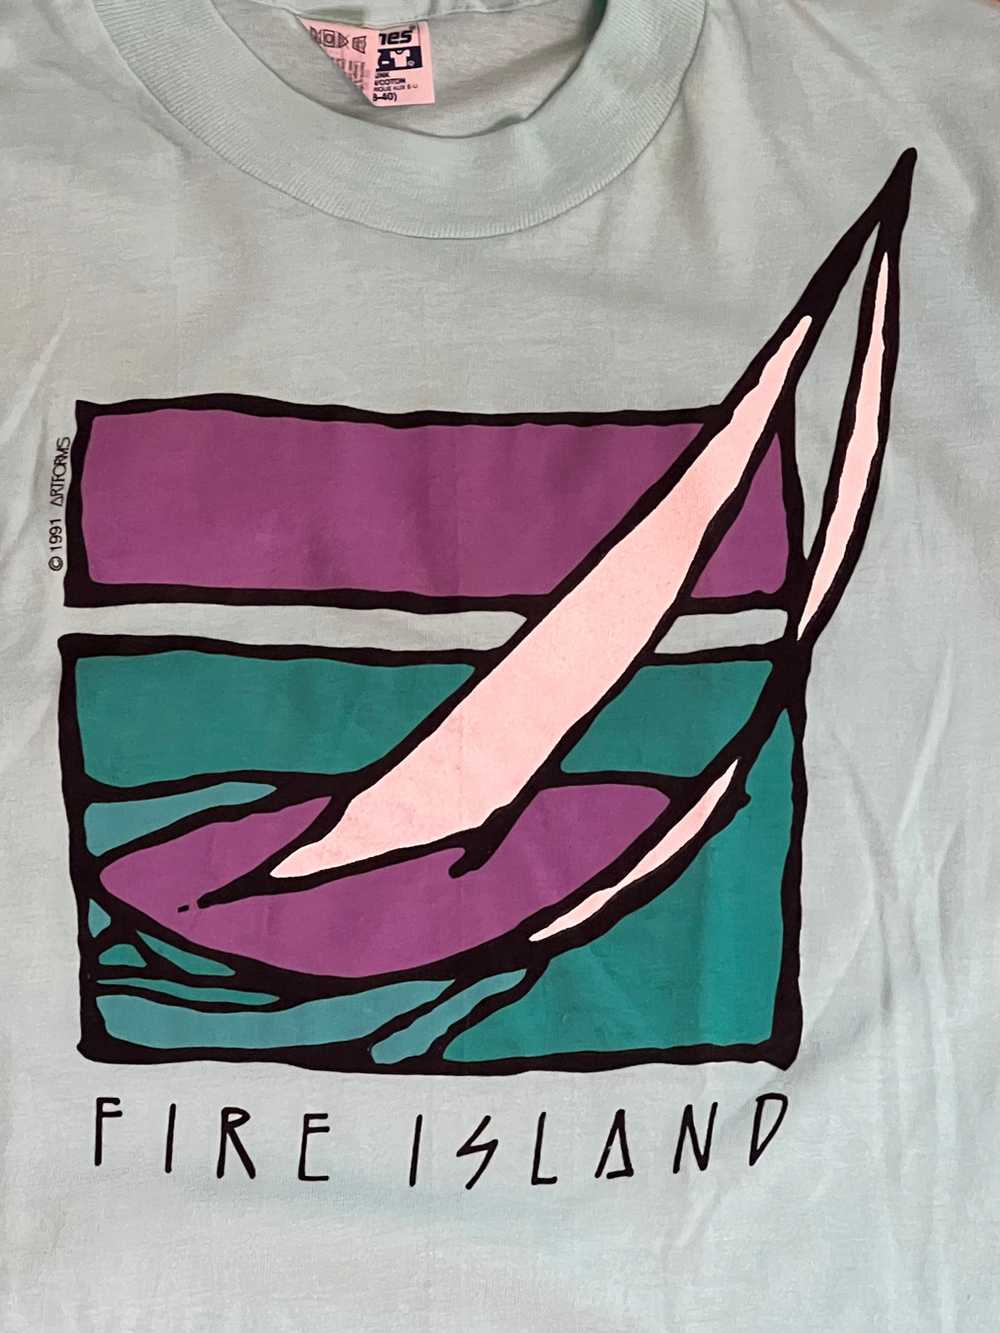 1991 Fire Island Boat Art - image 2